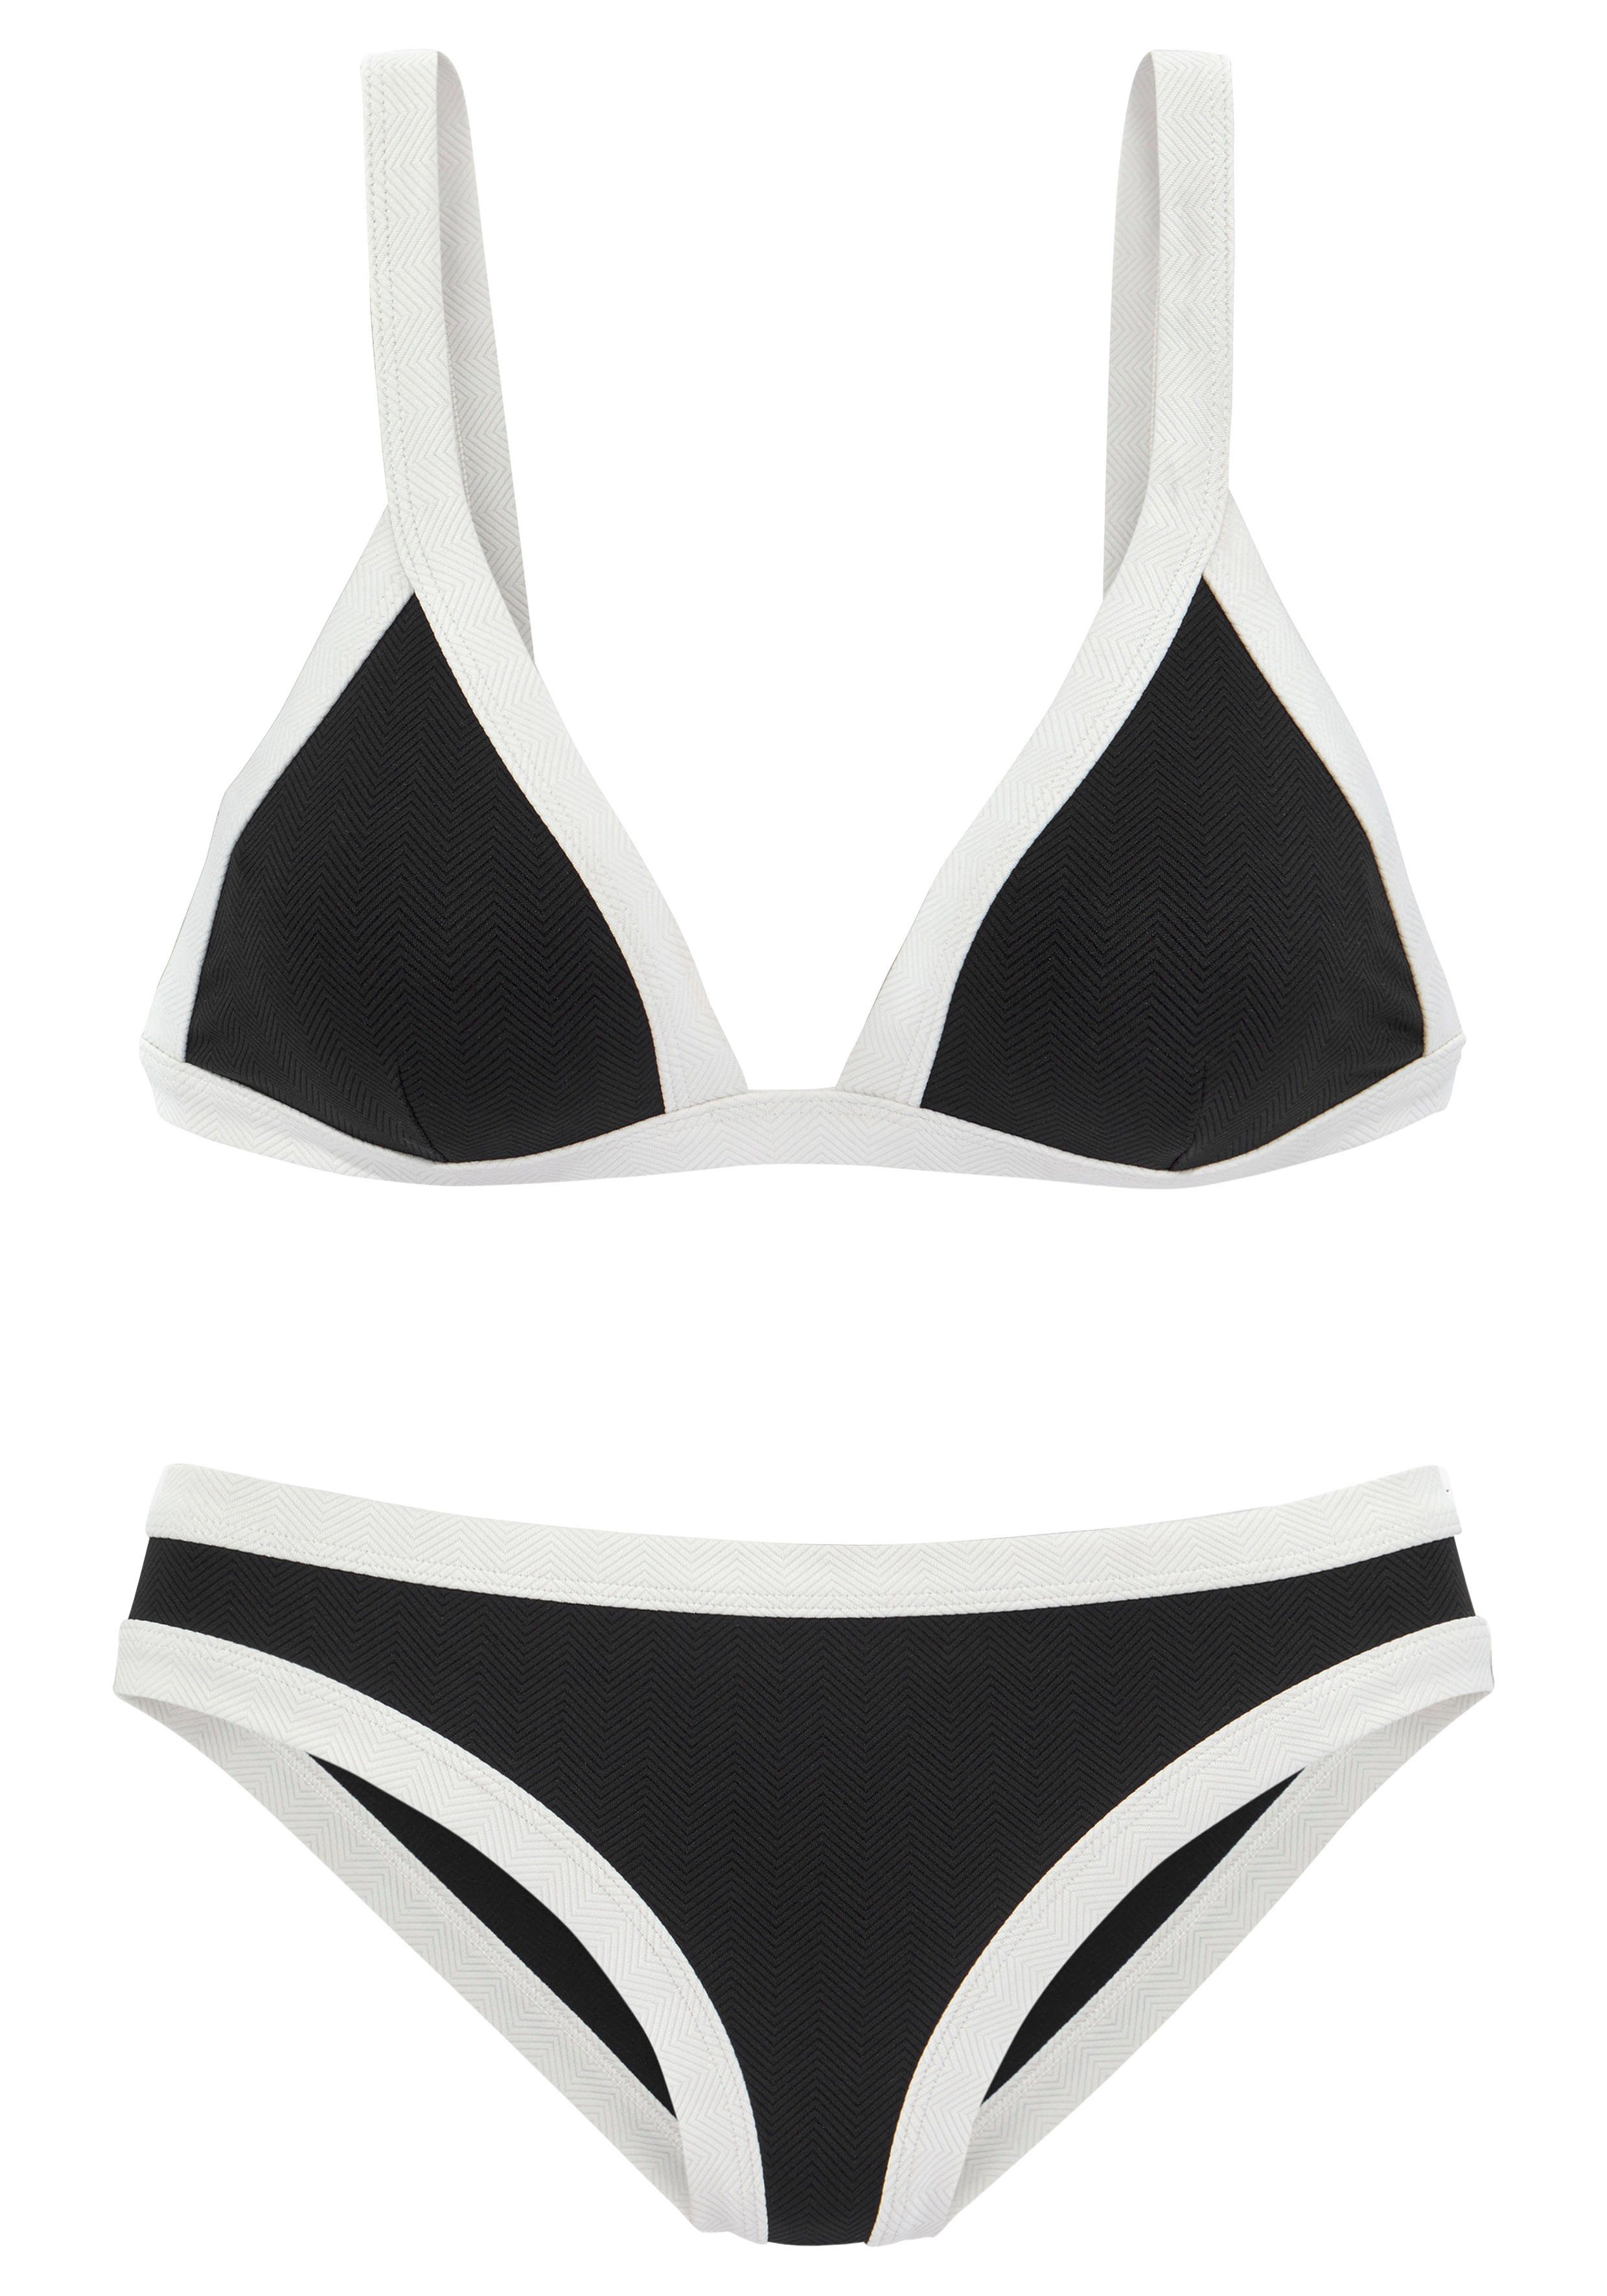 Venice Material Triangel-Bikini aus schwarz-weiß strukturierem Beach